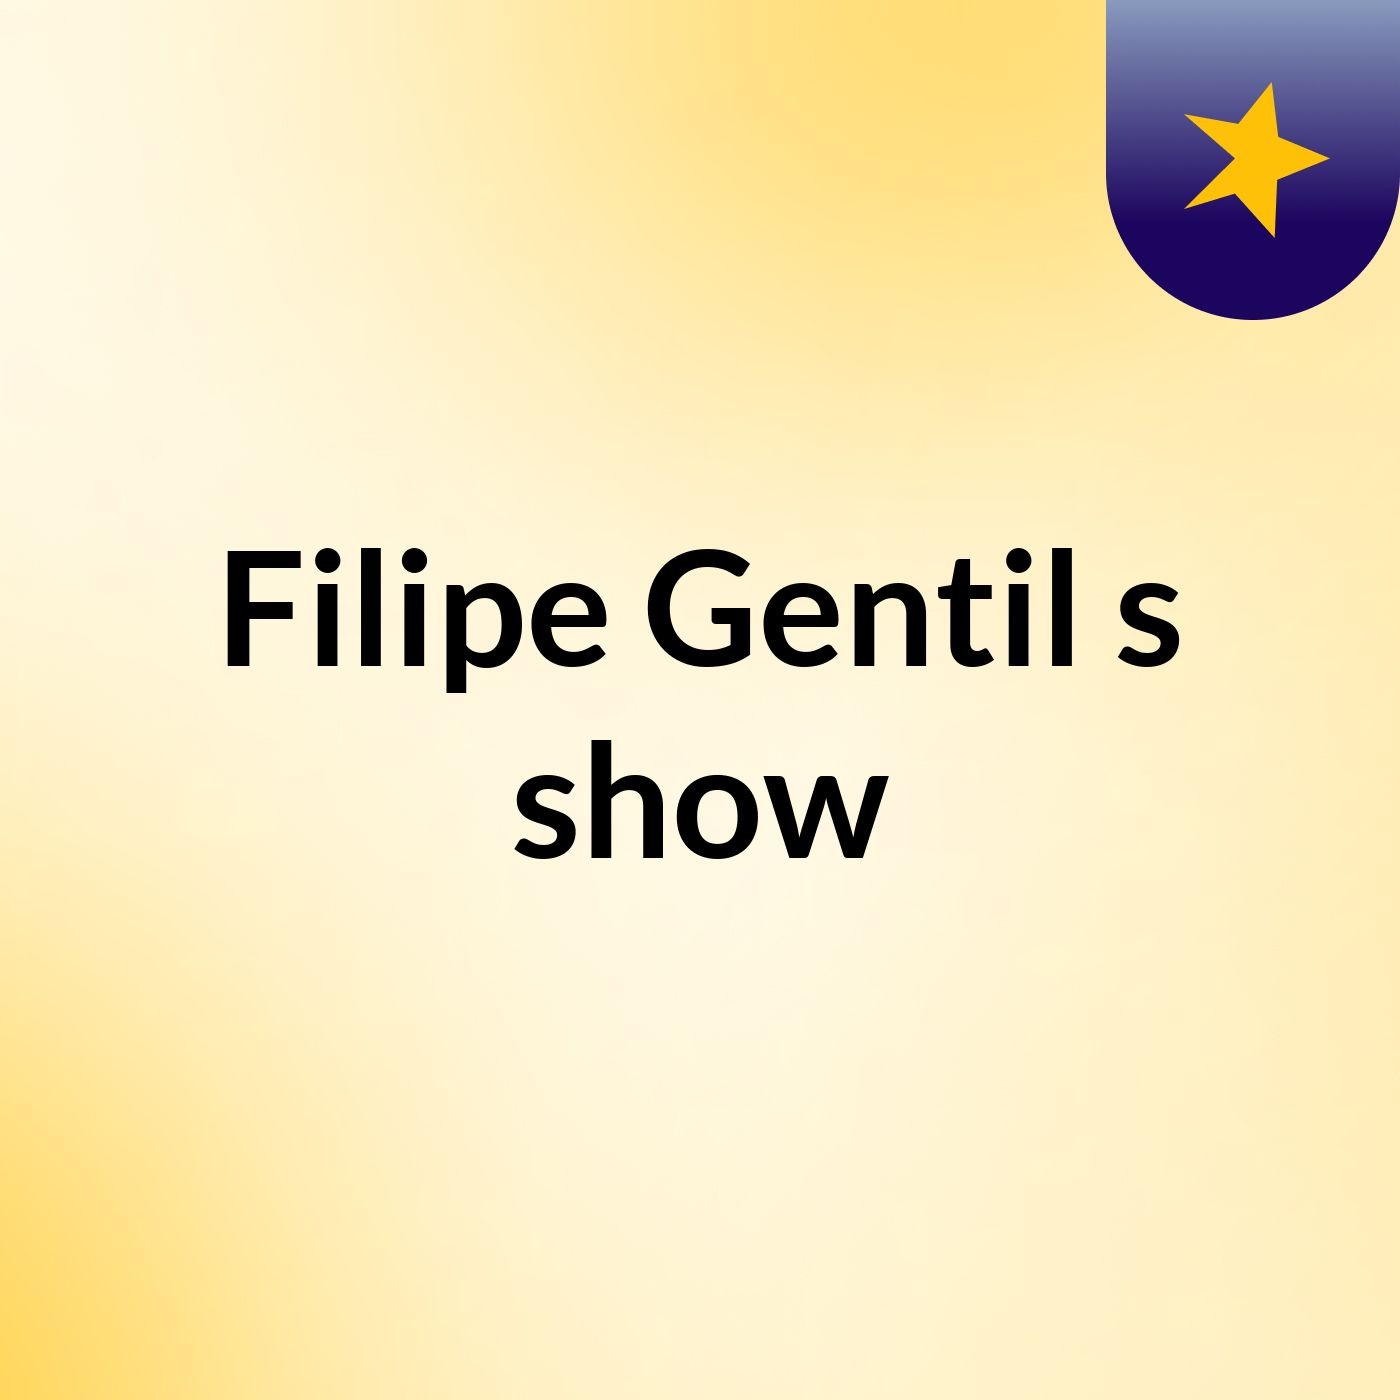 Filipe Gentil's show